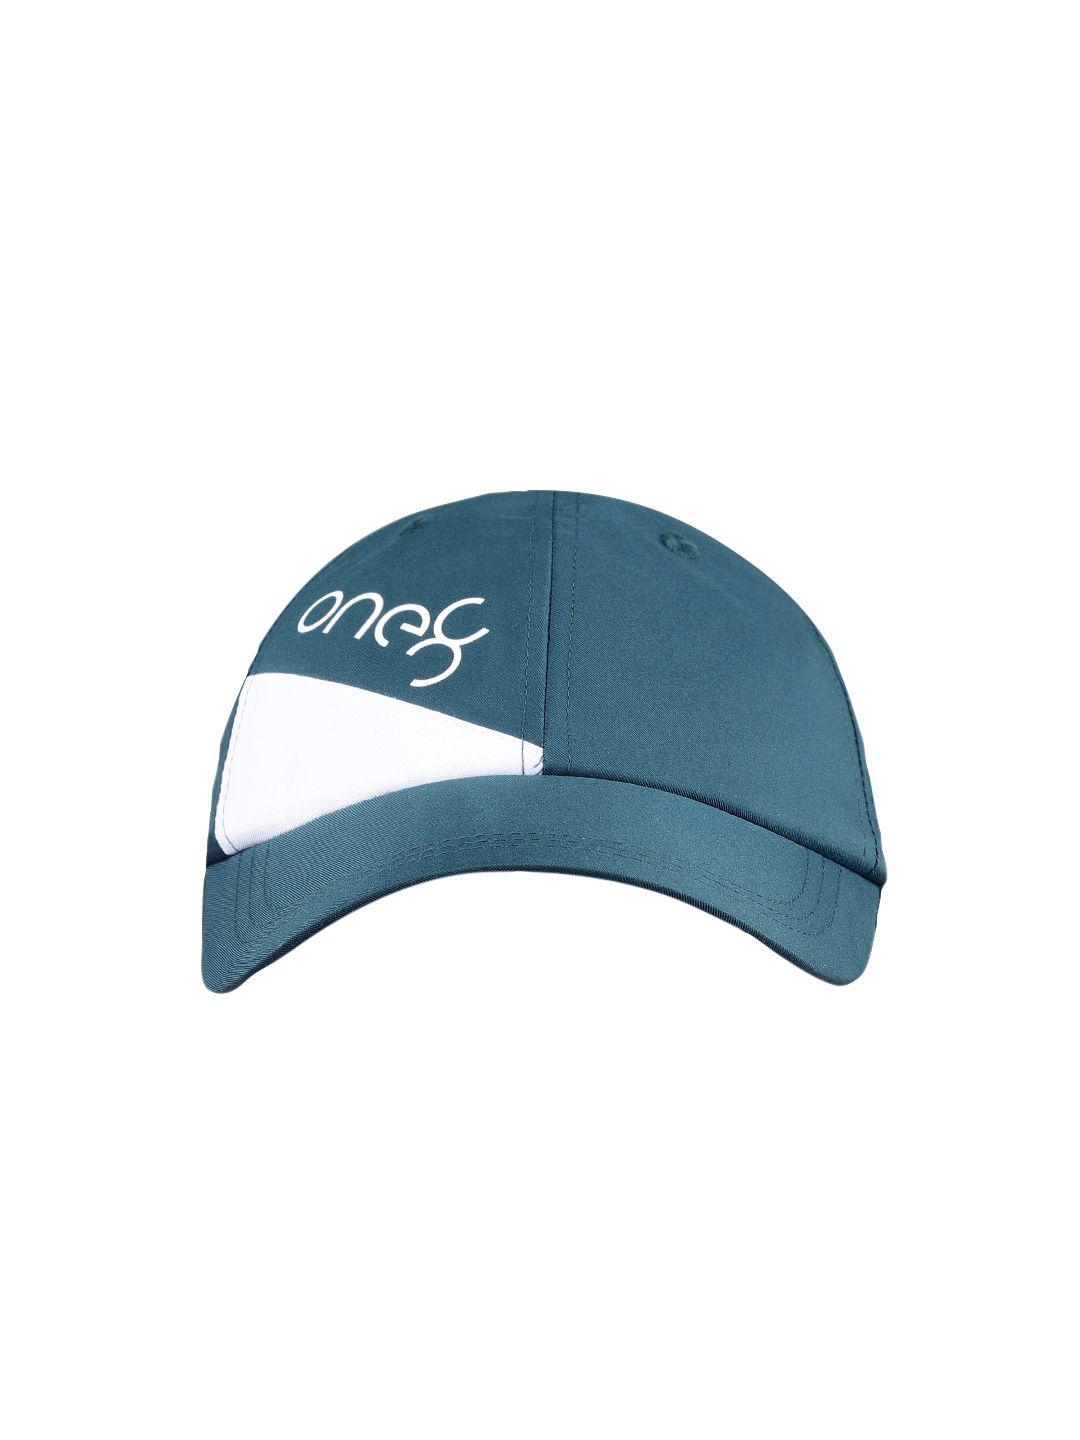 puma-x-one8-unisex-teal-printed-baseball-cap